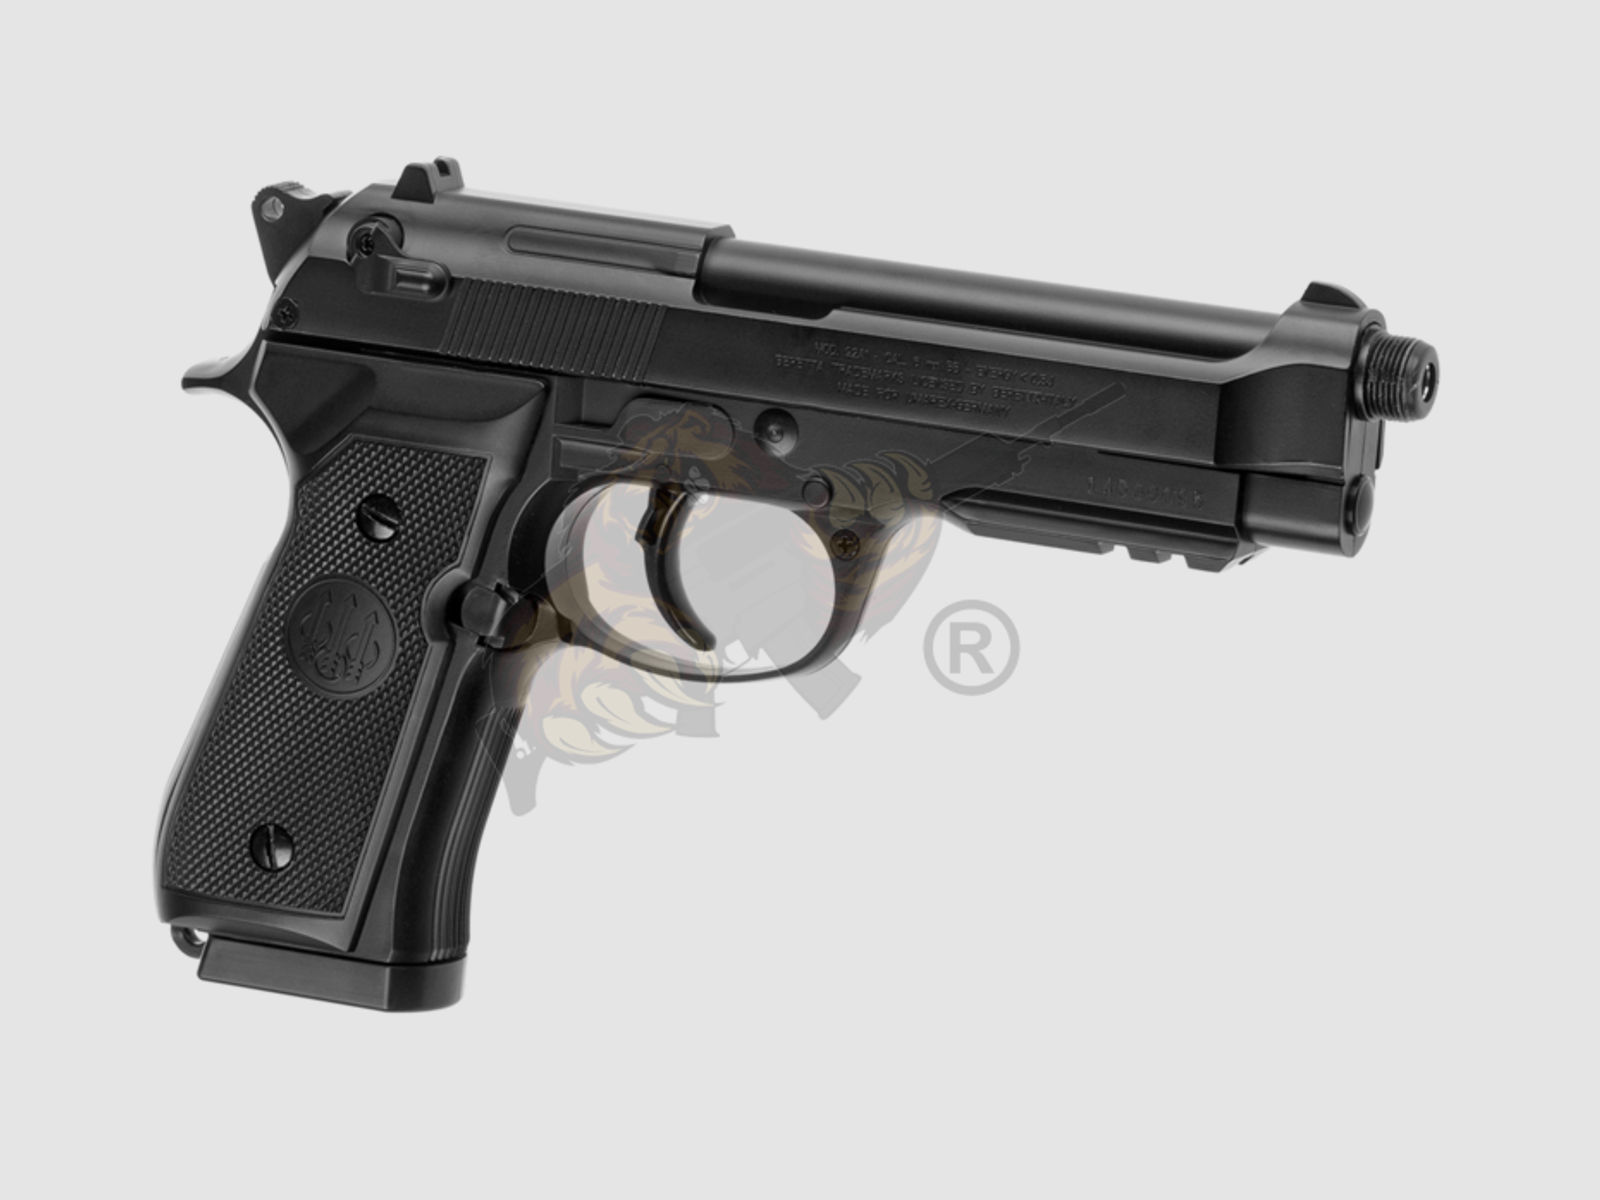 M92 FS A1 Metall Version AEP (Beretta) -  Airsoft Pistole - max 0,5 Joule